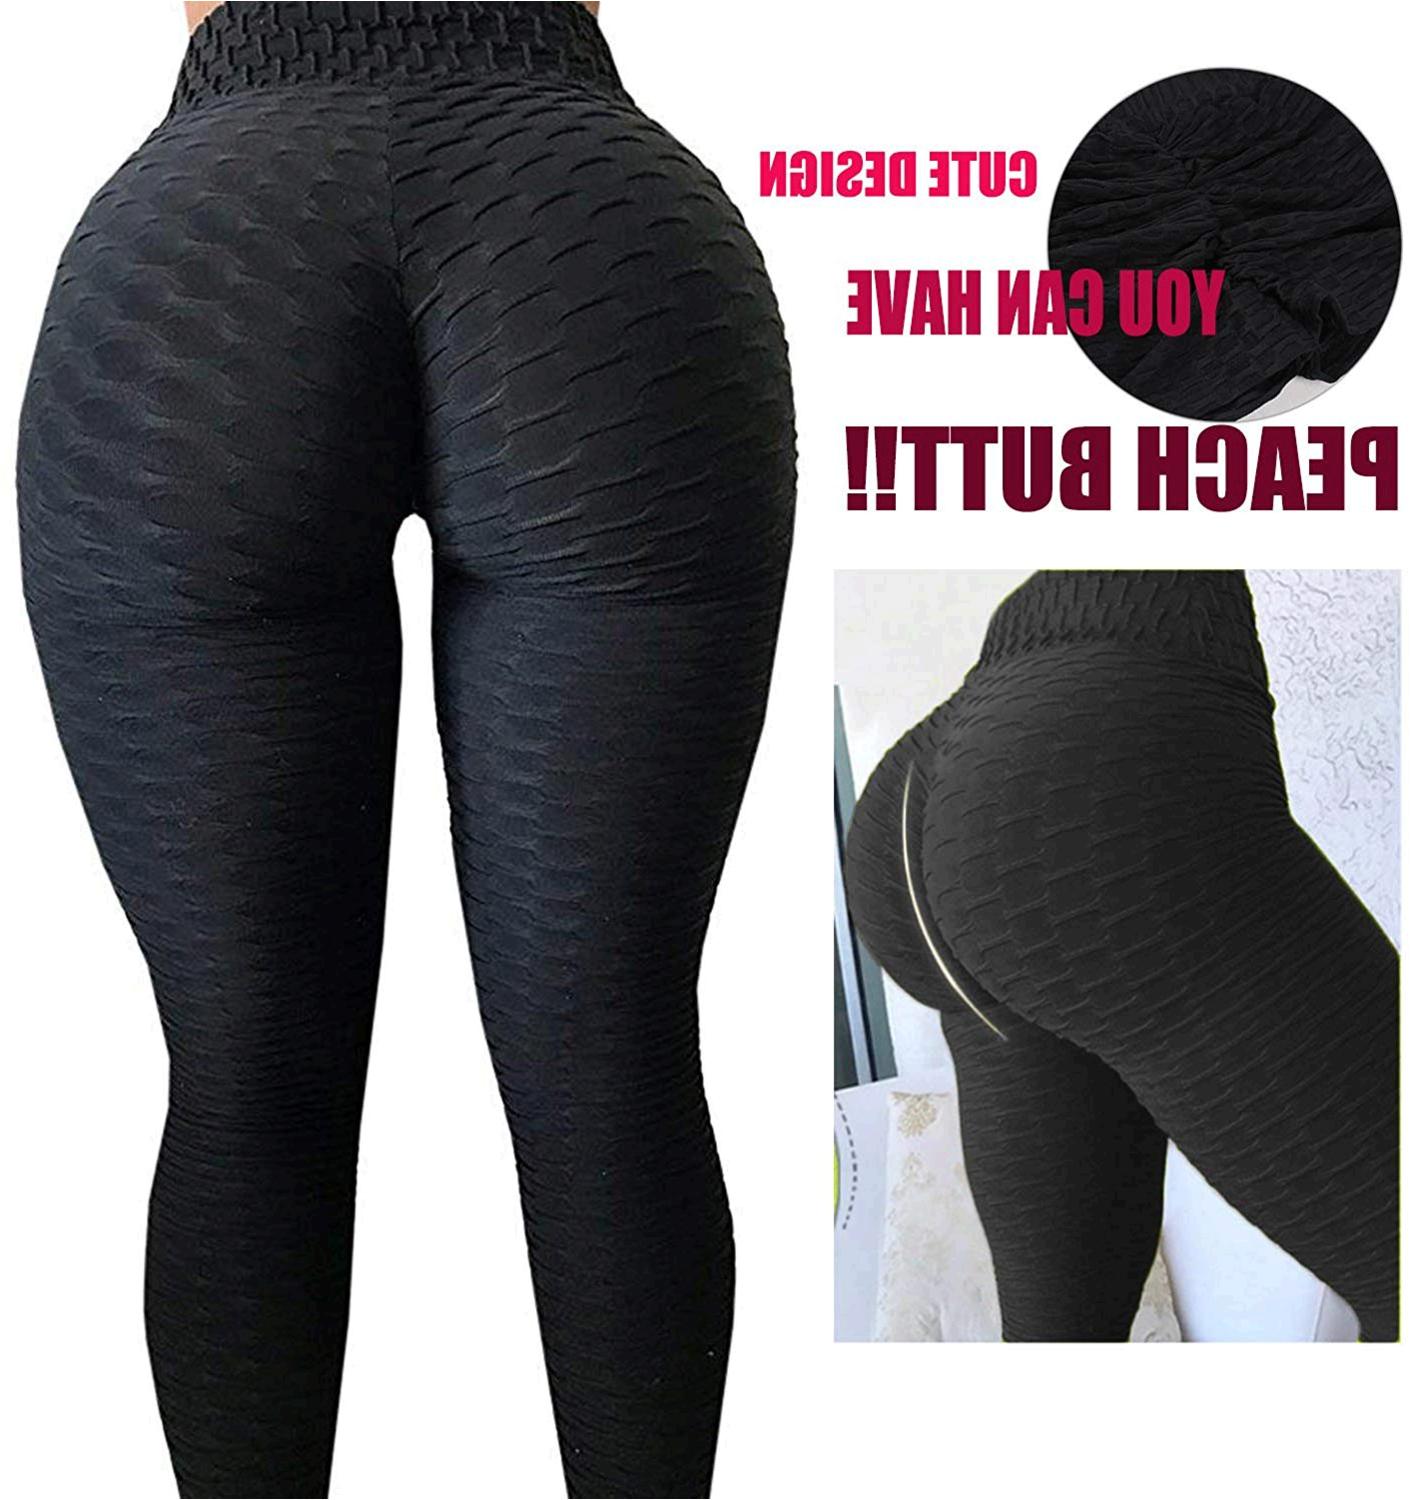 Fittoo Womens Heart Shape Yoga Pants Sport Pants Workout Black Size Medium Ebay 